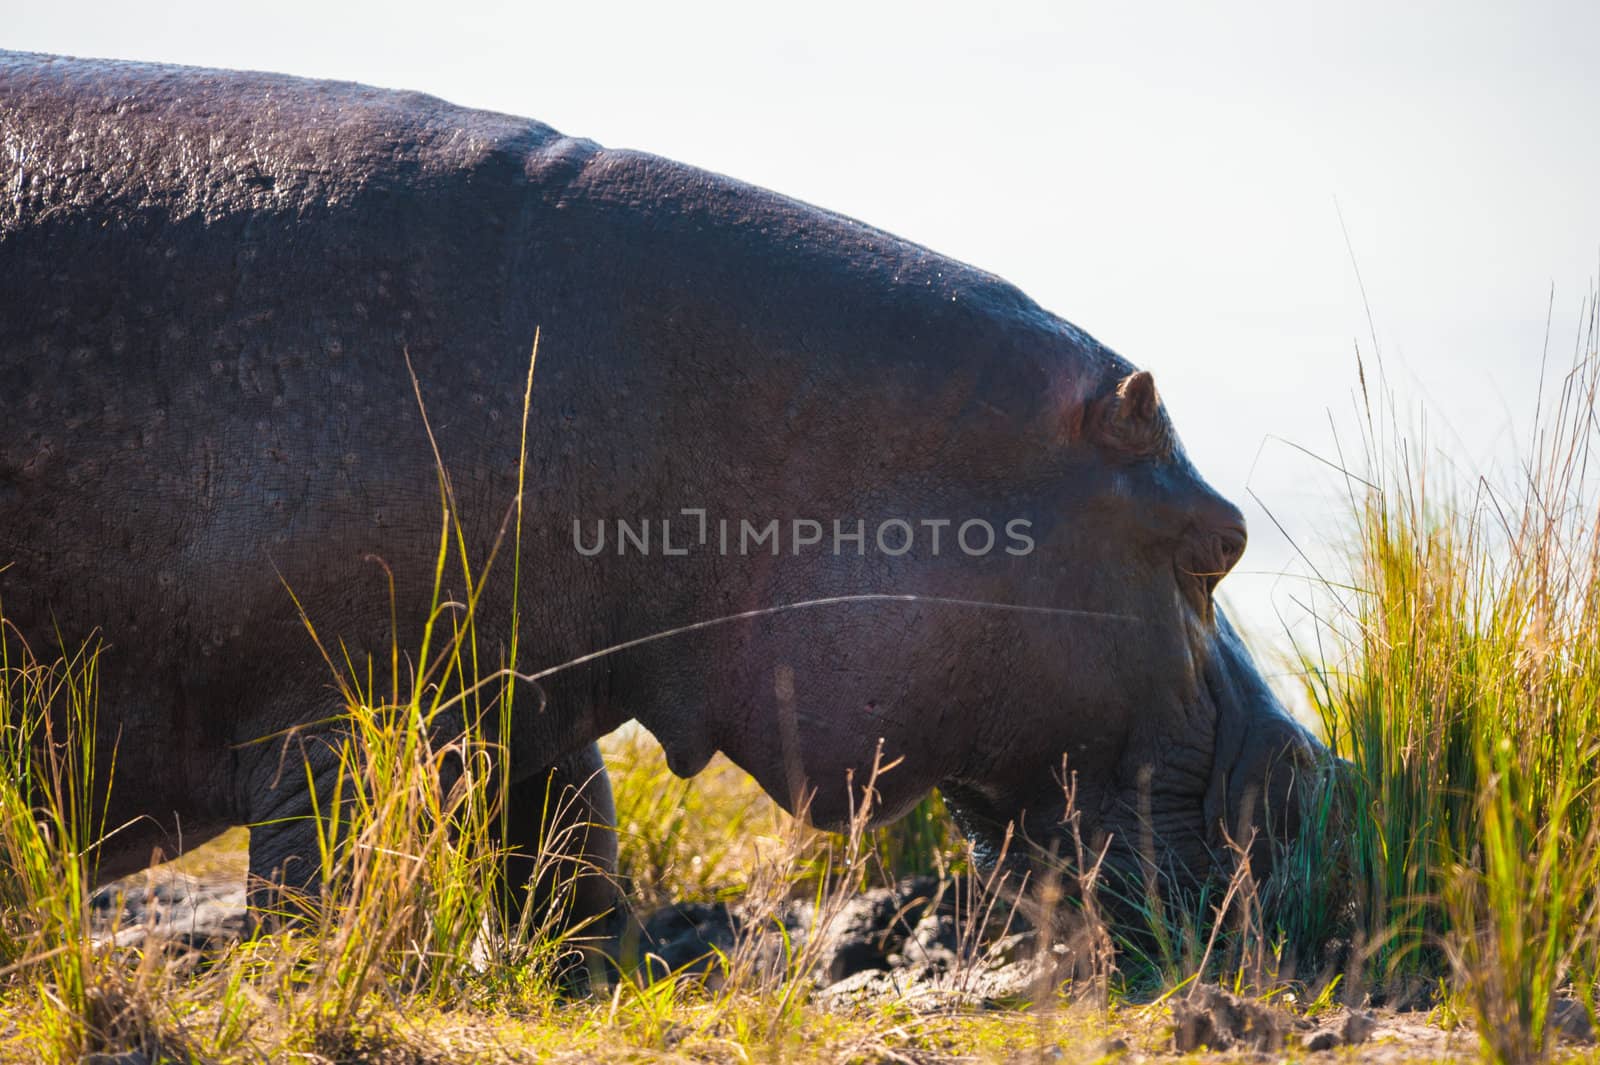 Grazing hippopotamus by edan